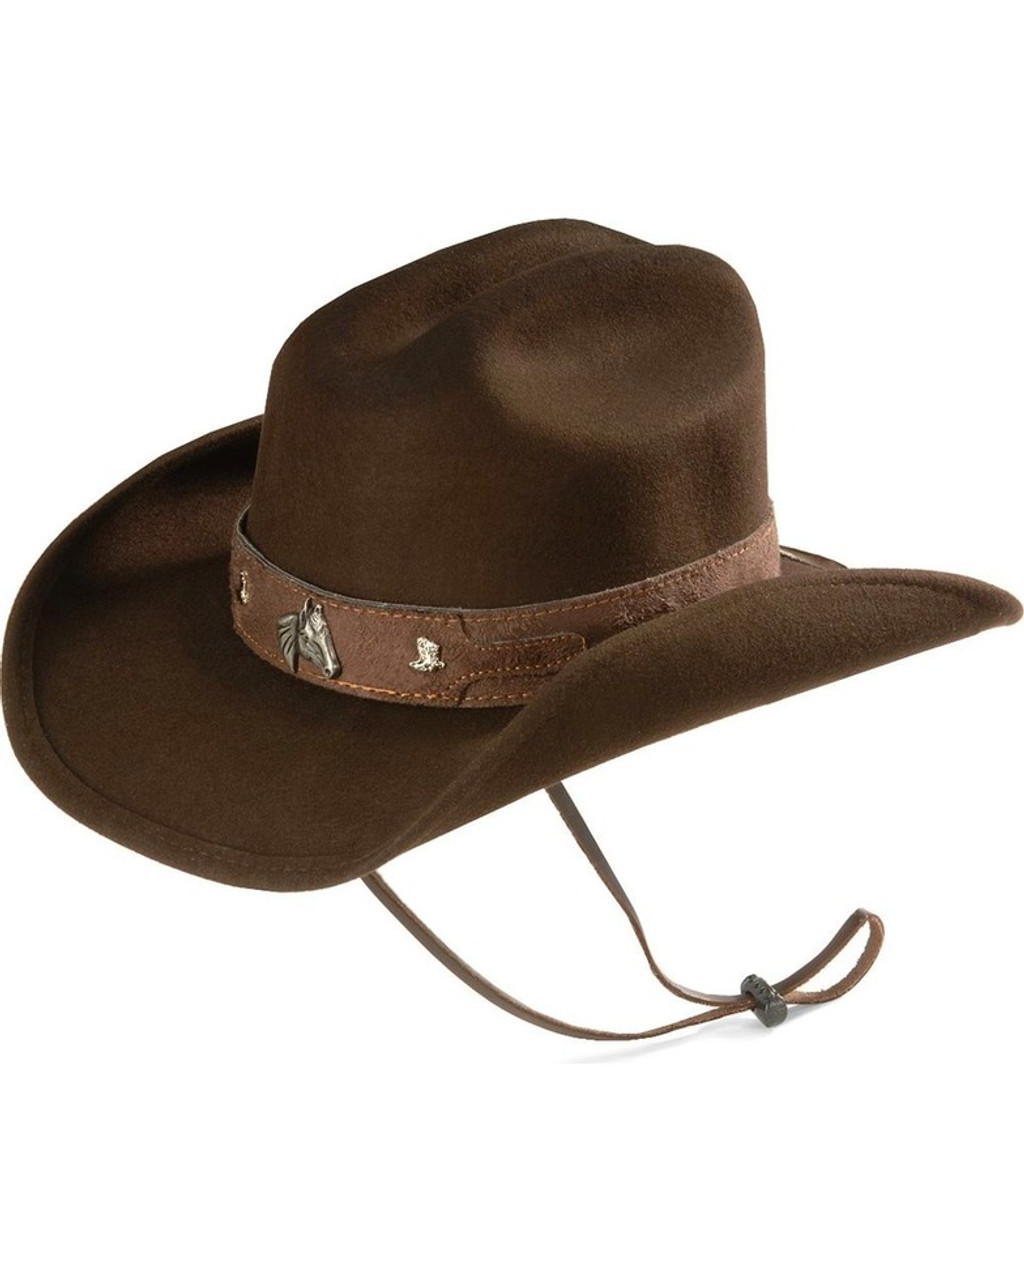 child's felt cowboy hat